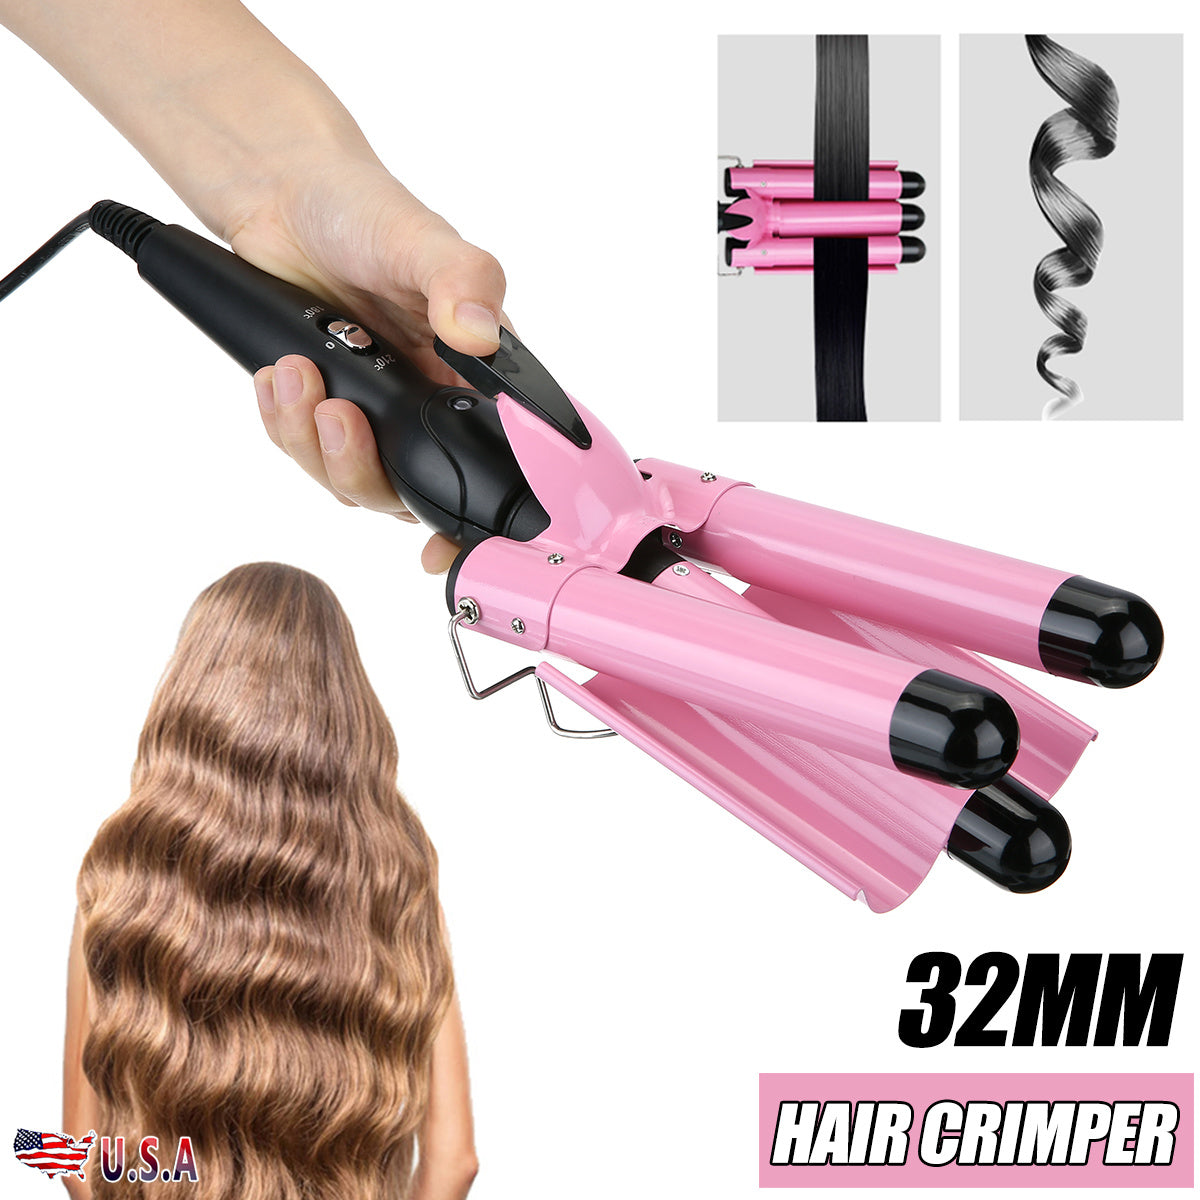 Free shipping 28MM Triple 3 Barrel Ceramic Hair Crimper Iron Salon Styler Curling Curler Waver  YJ